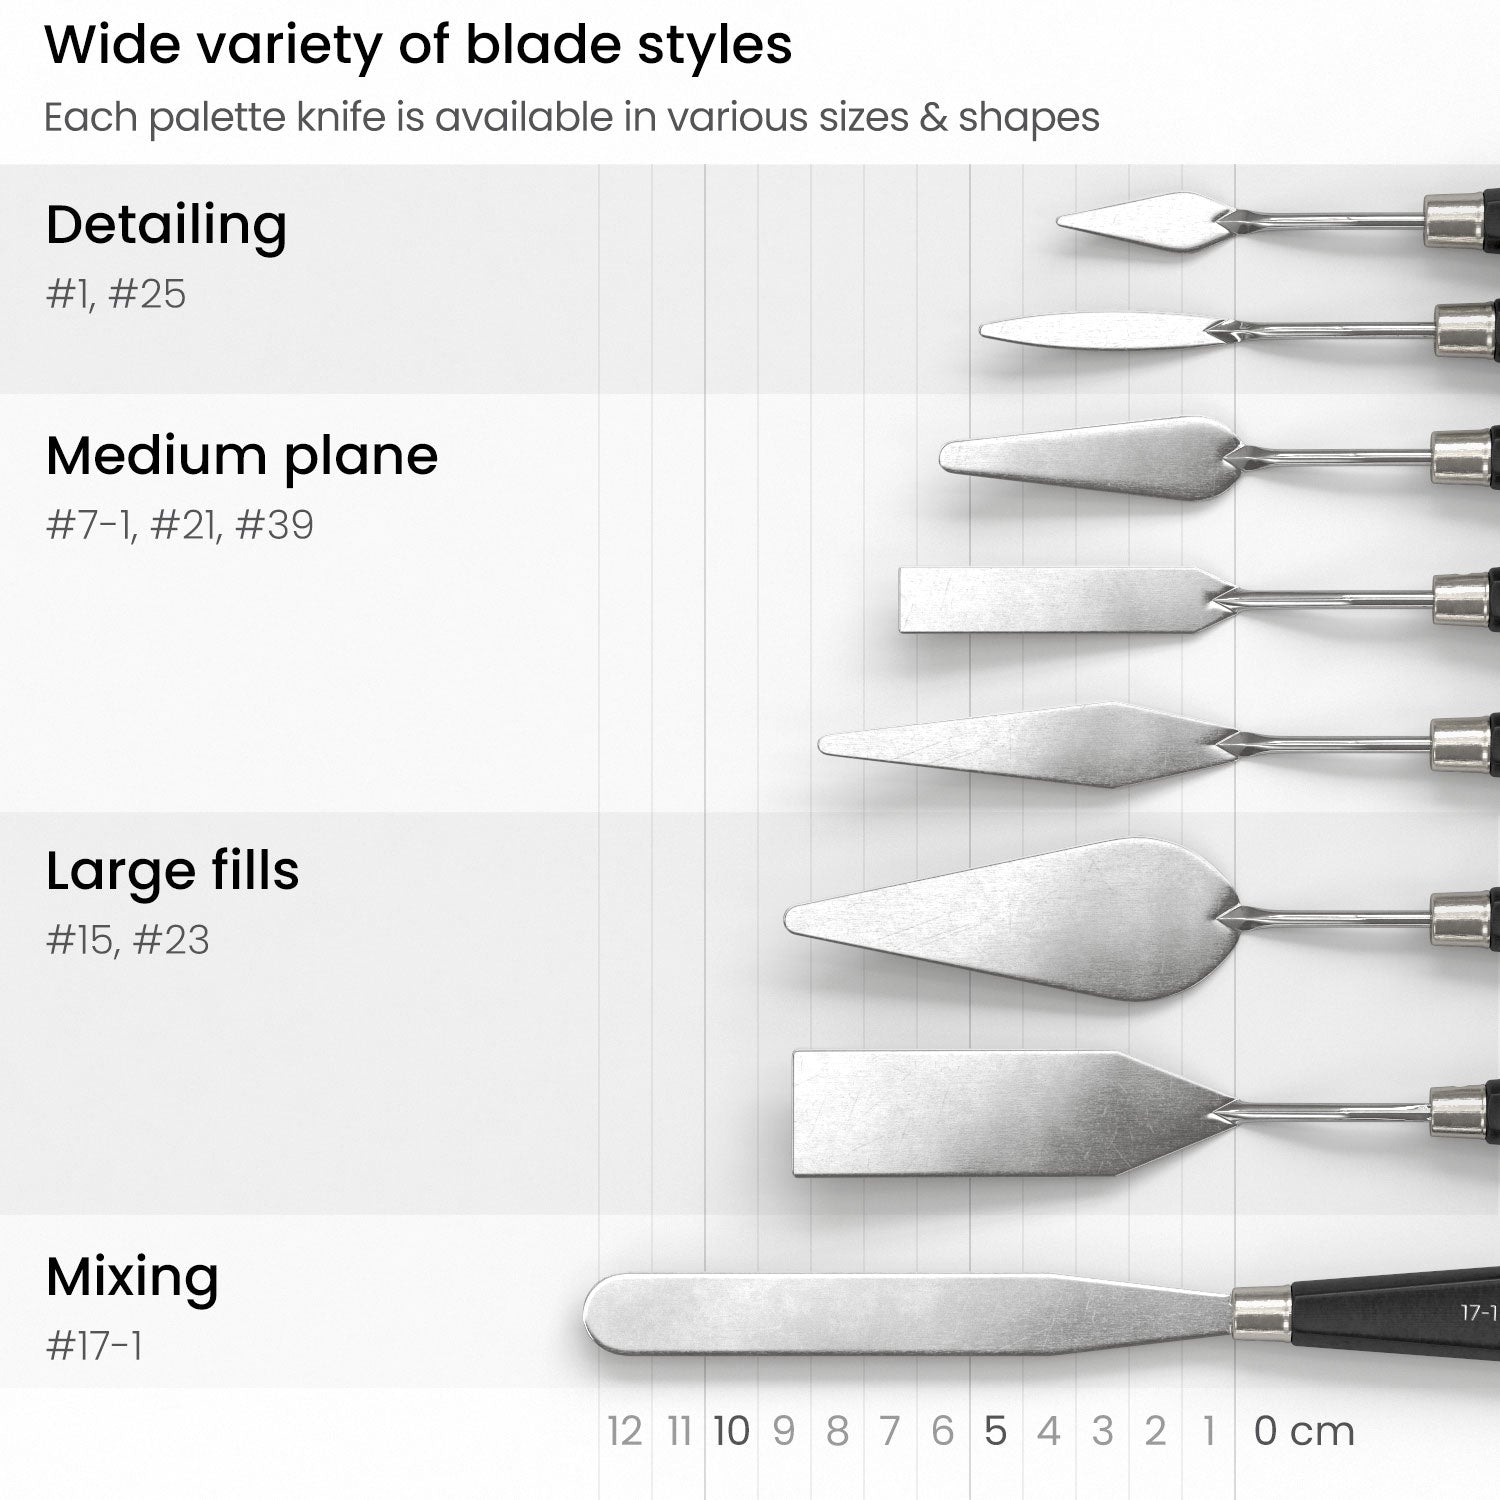  5 Pcs Palette Knives Set with 10 Pcs Painting Brushes